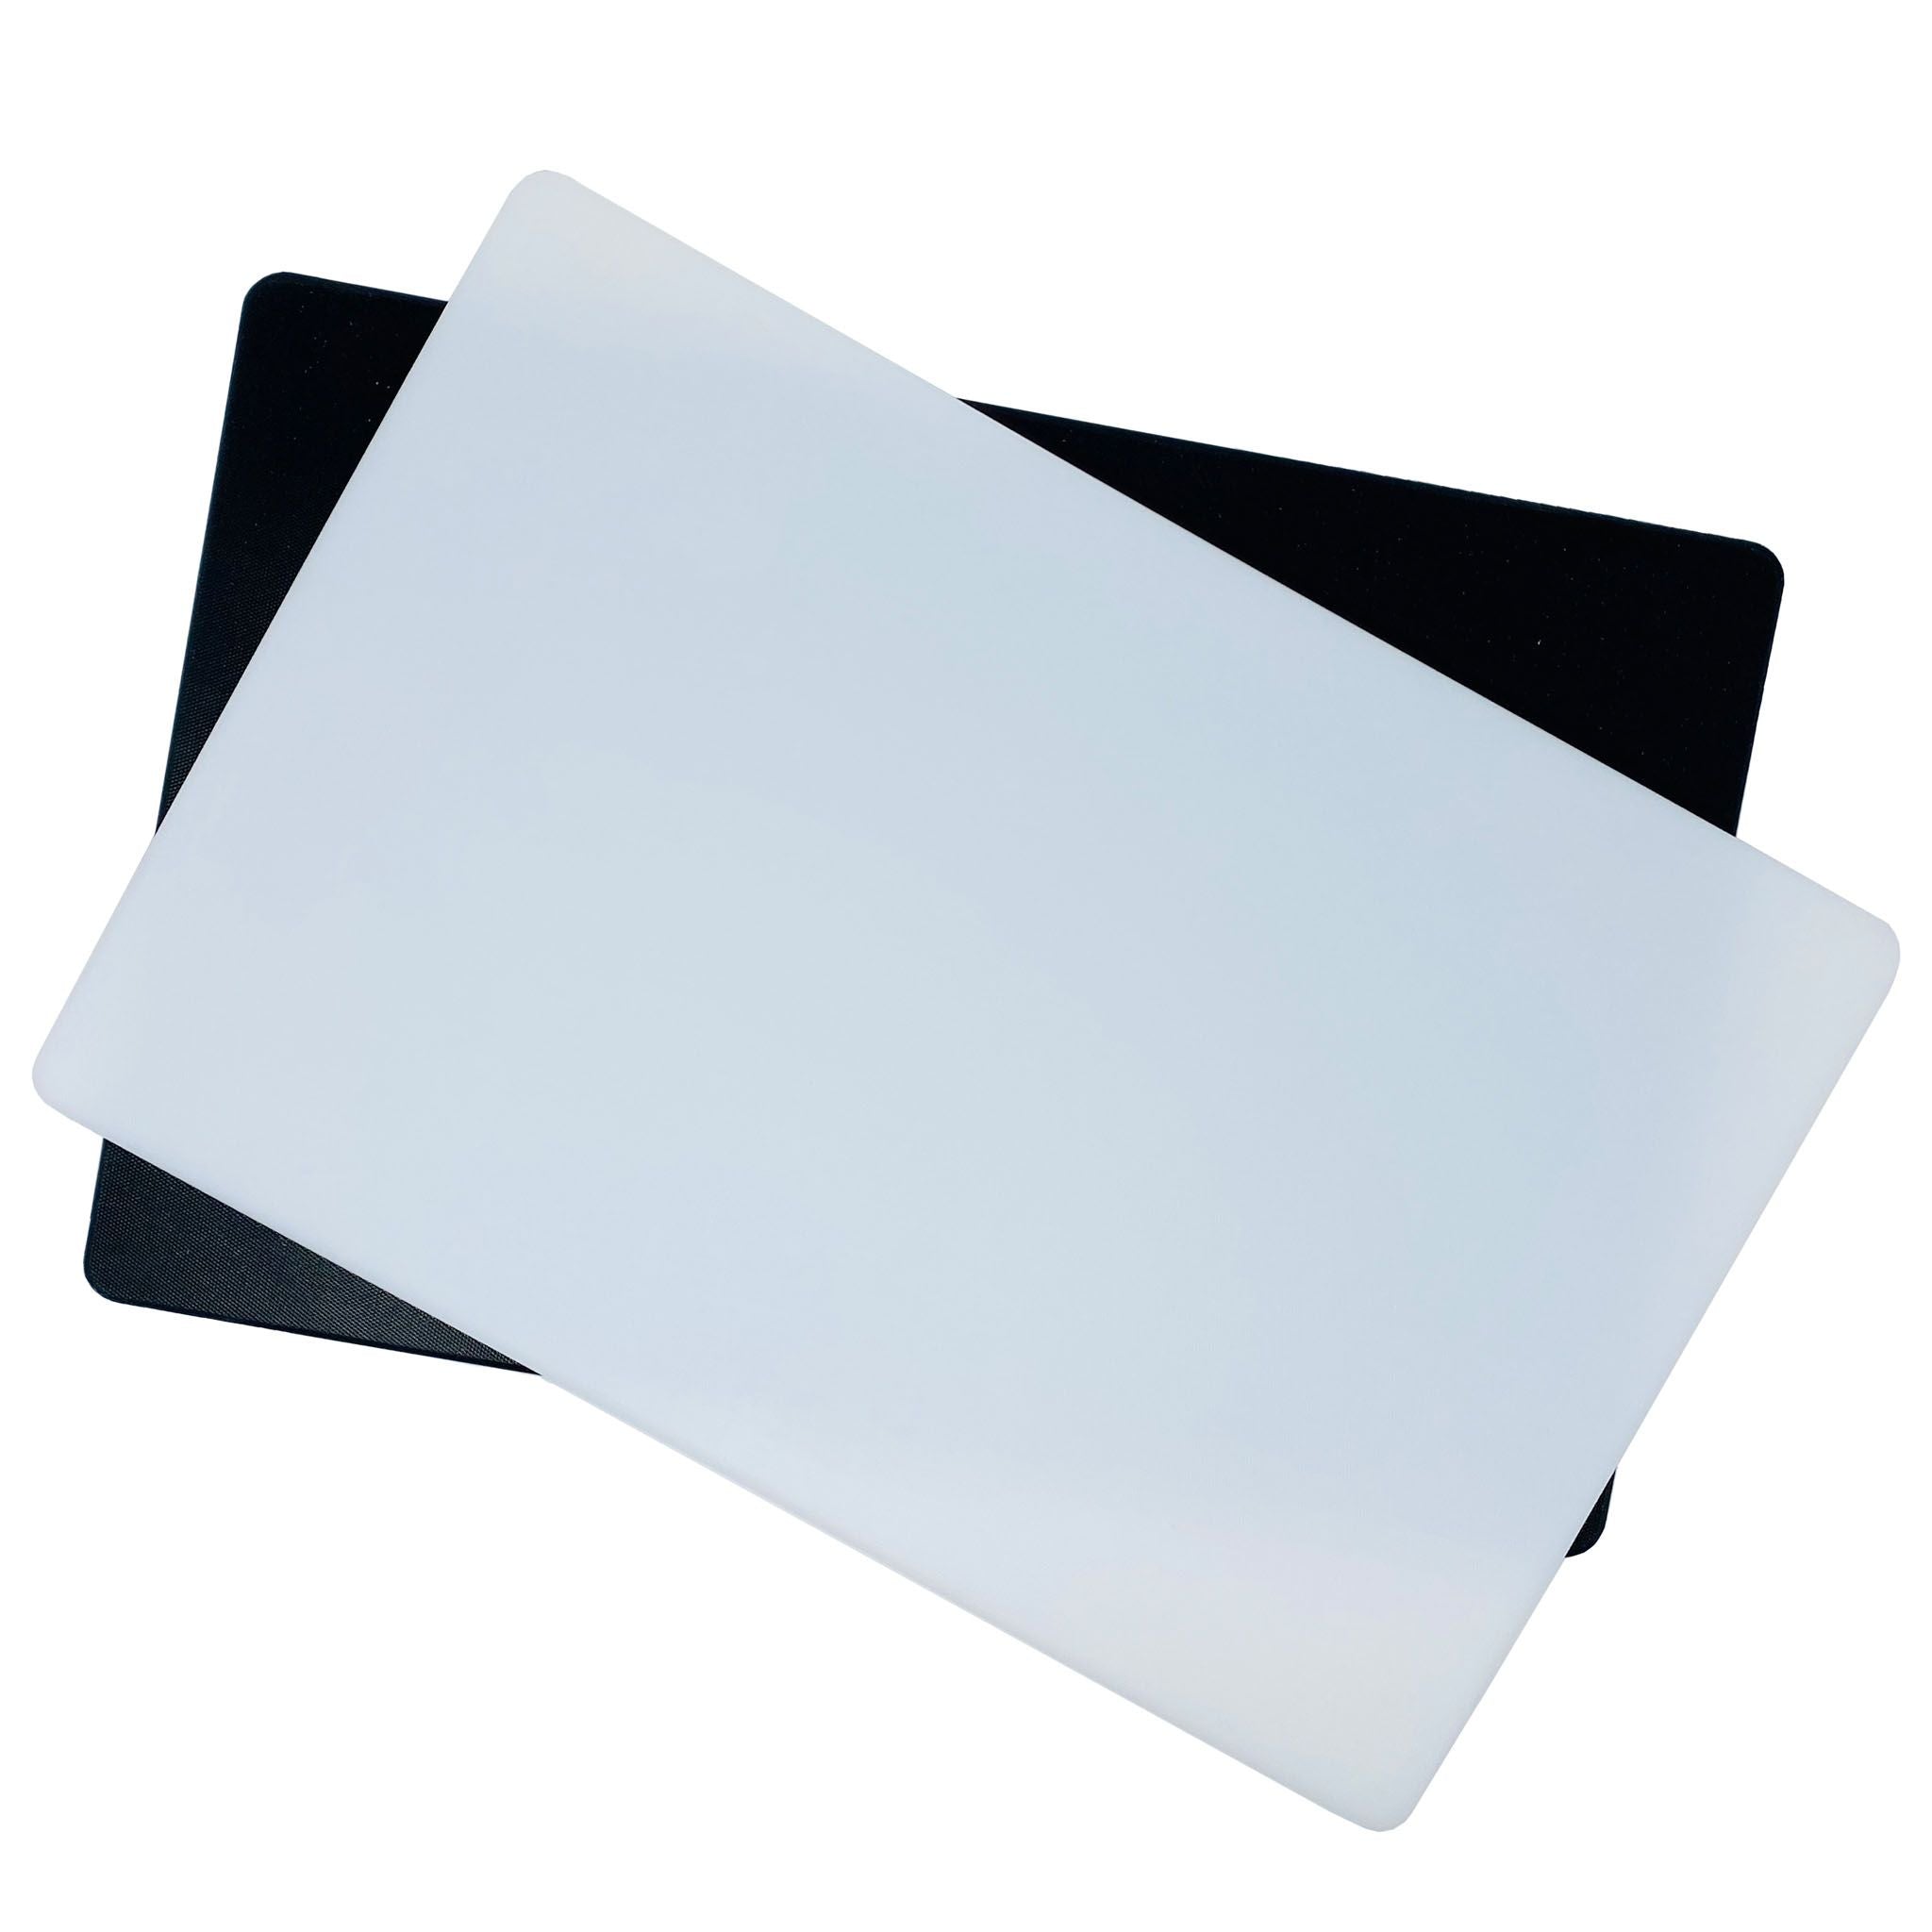 White HDPE Plastic Sheet